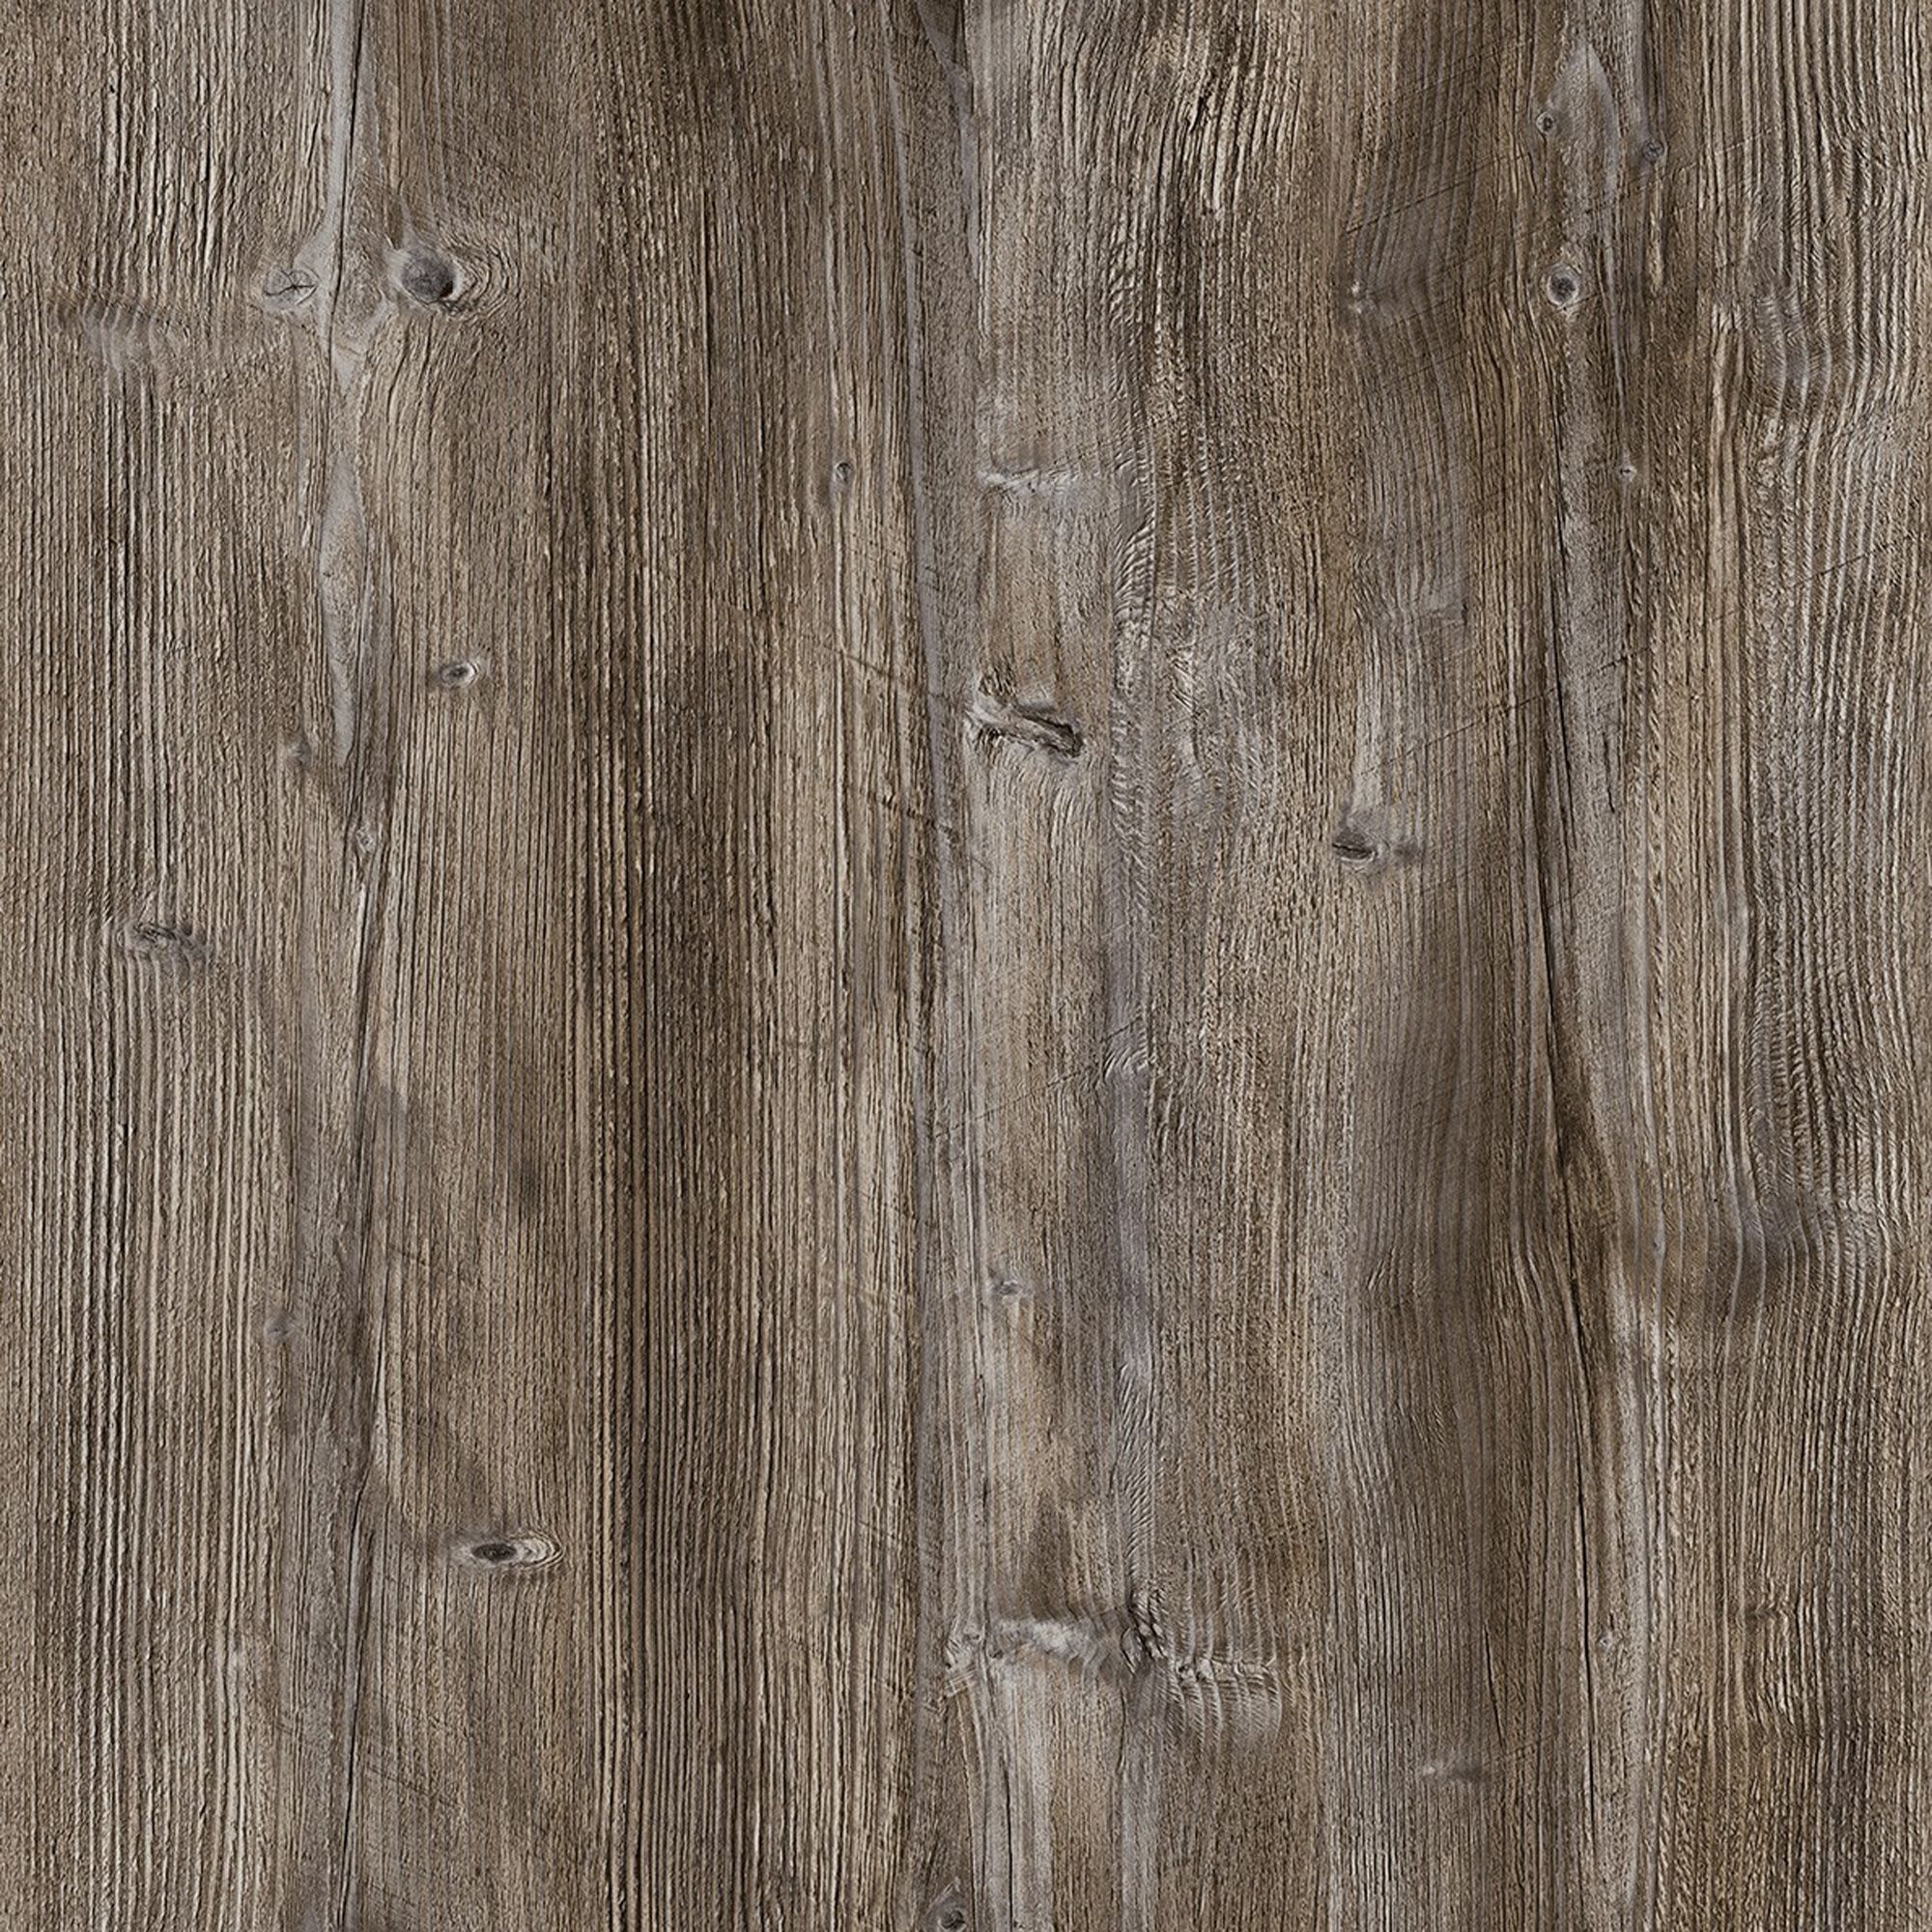 Splashwall Matt Stained pine Laminate Panel (H)2420mm (W)1200mm